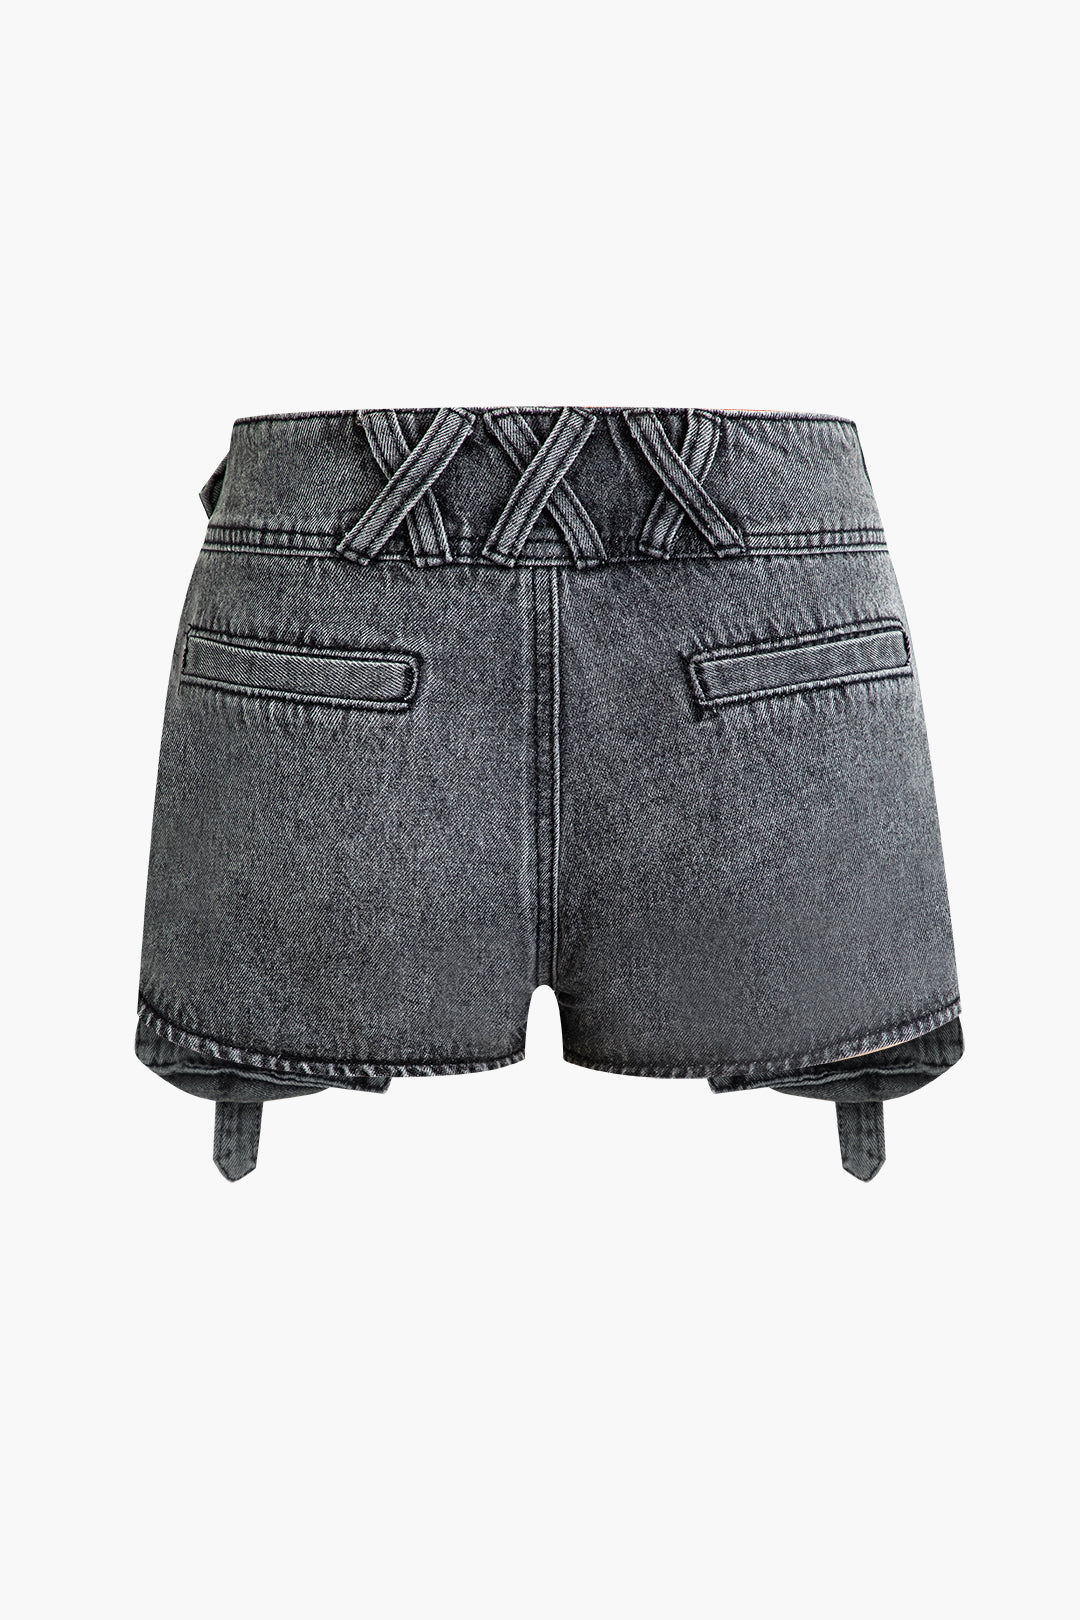 Flap Pocket Cargo Denim Shorts